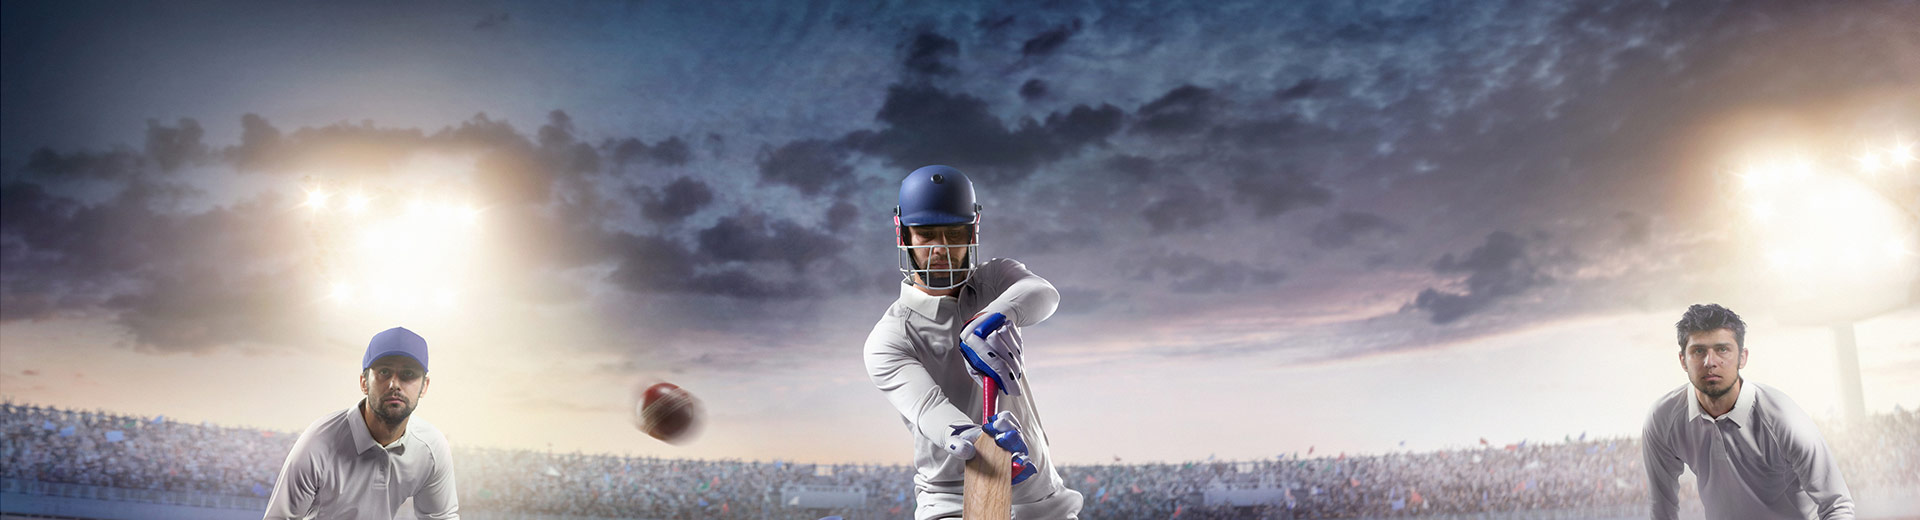 Cricket Uniforms Manufacturers in Ufa